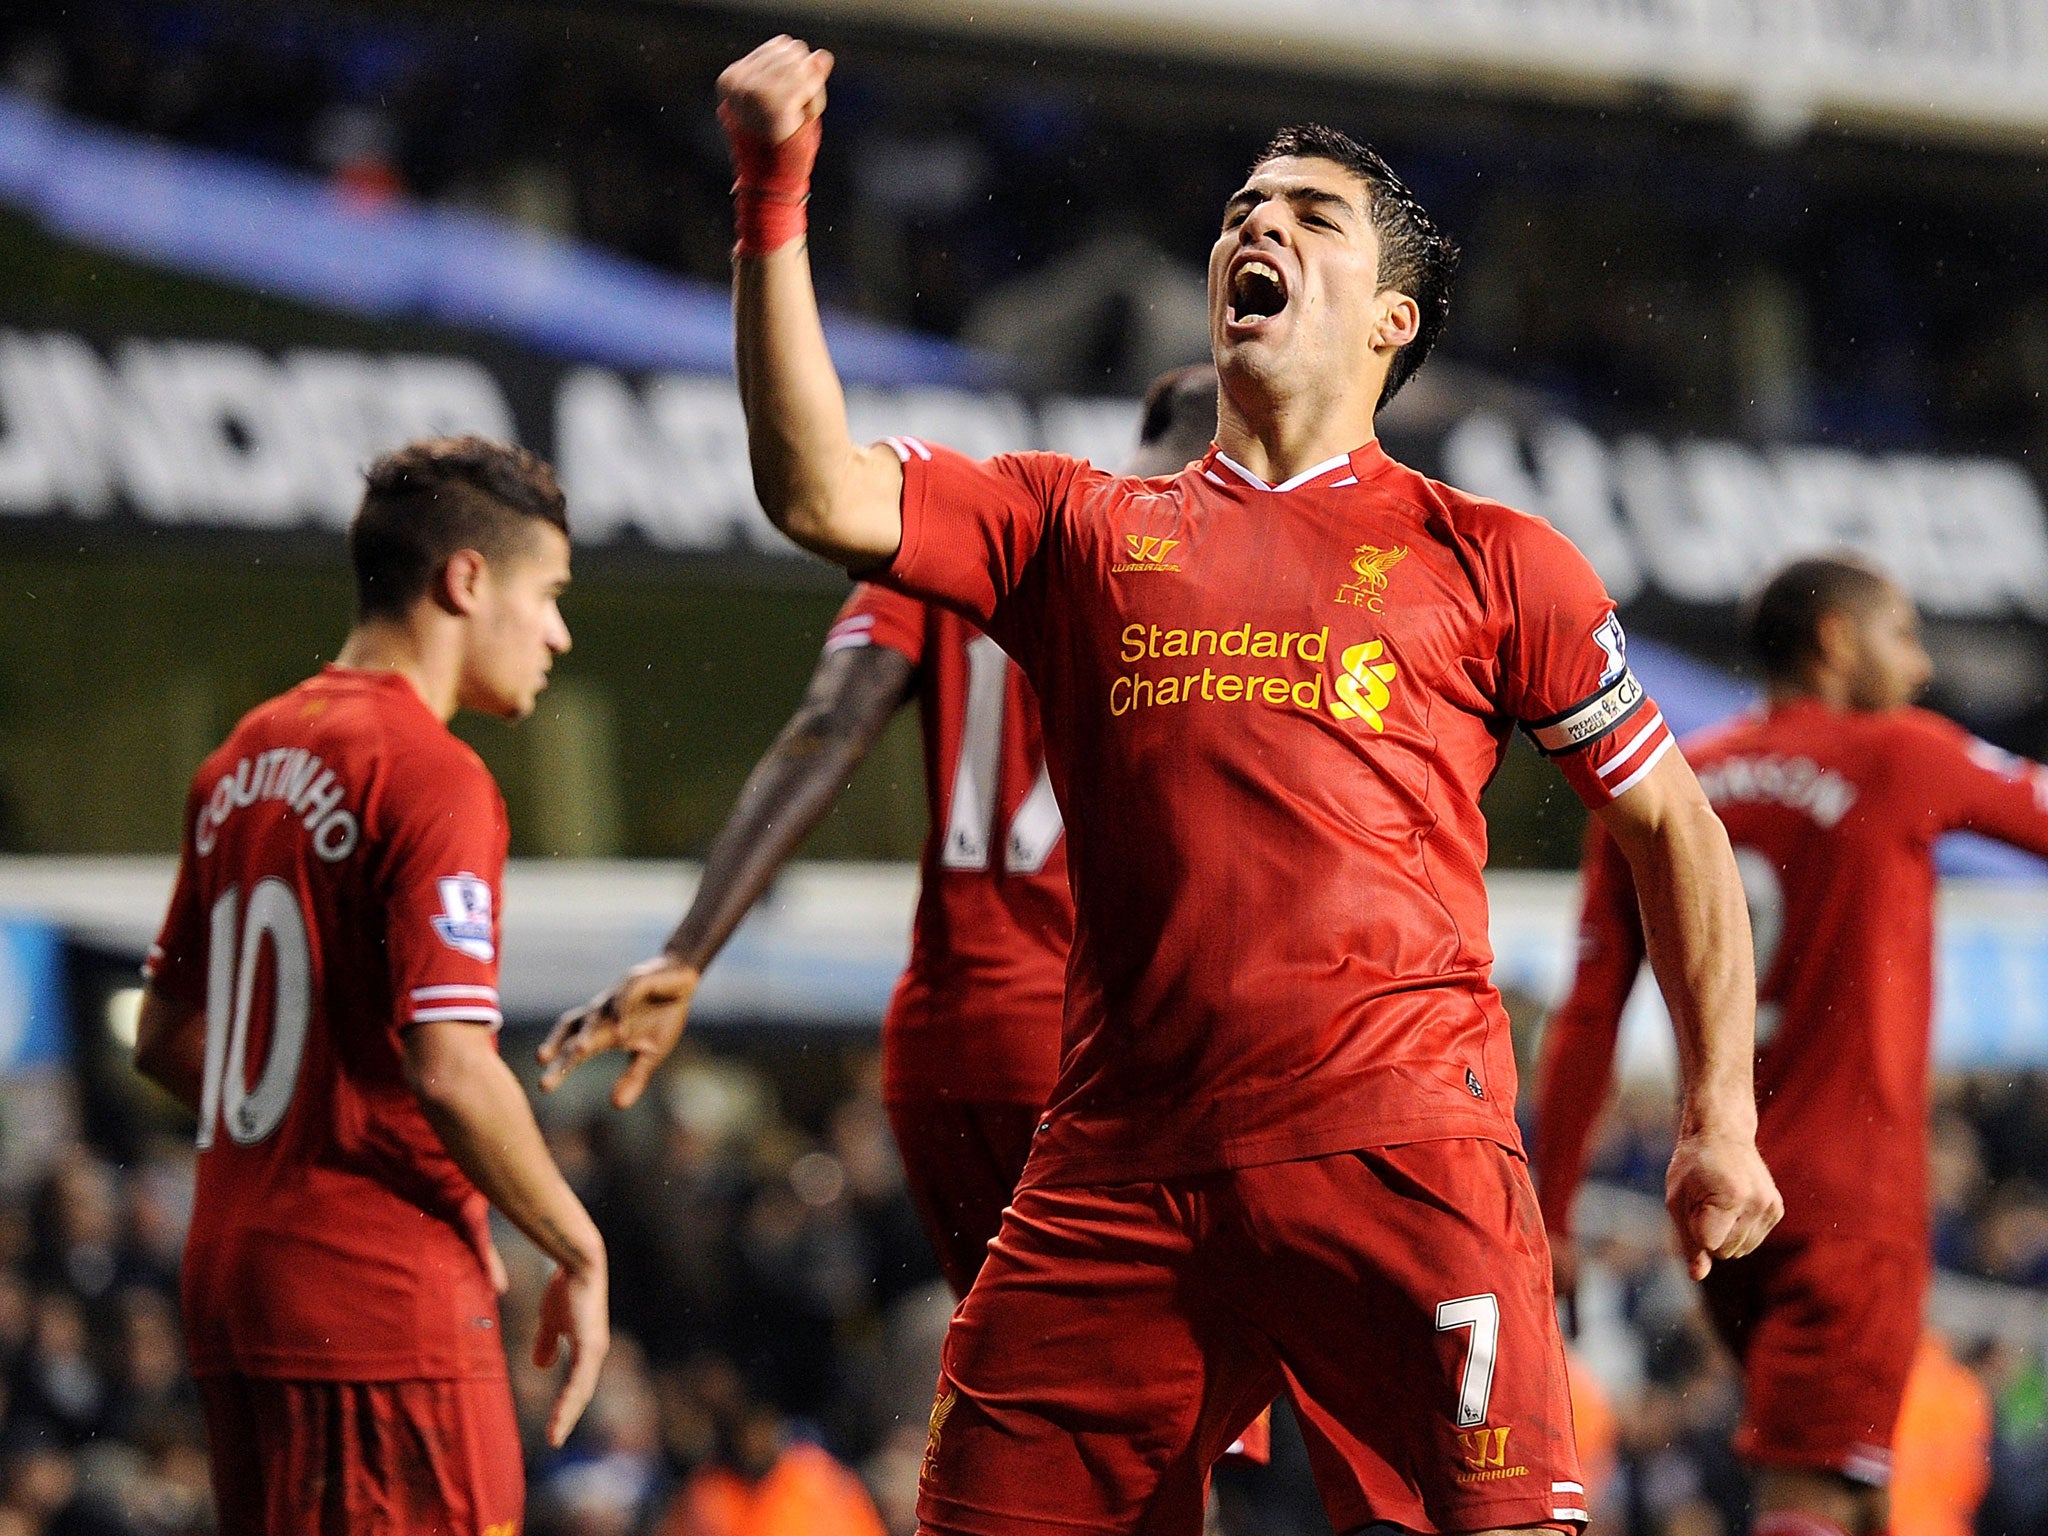 Liverpool striker Luis Suarez celebrates after scoring against Tottenham